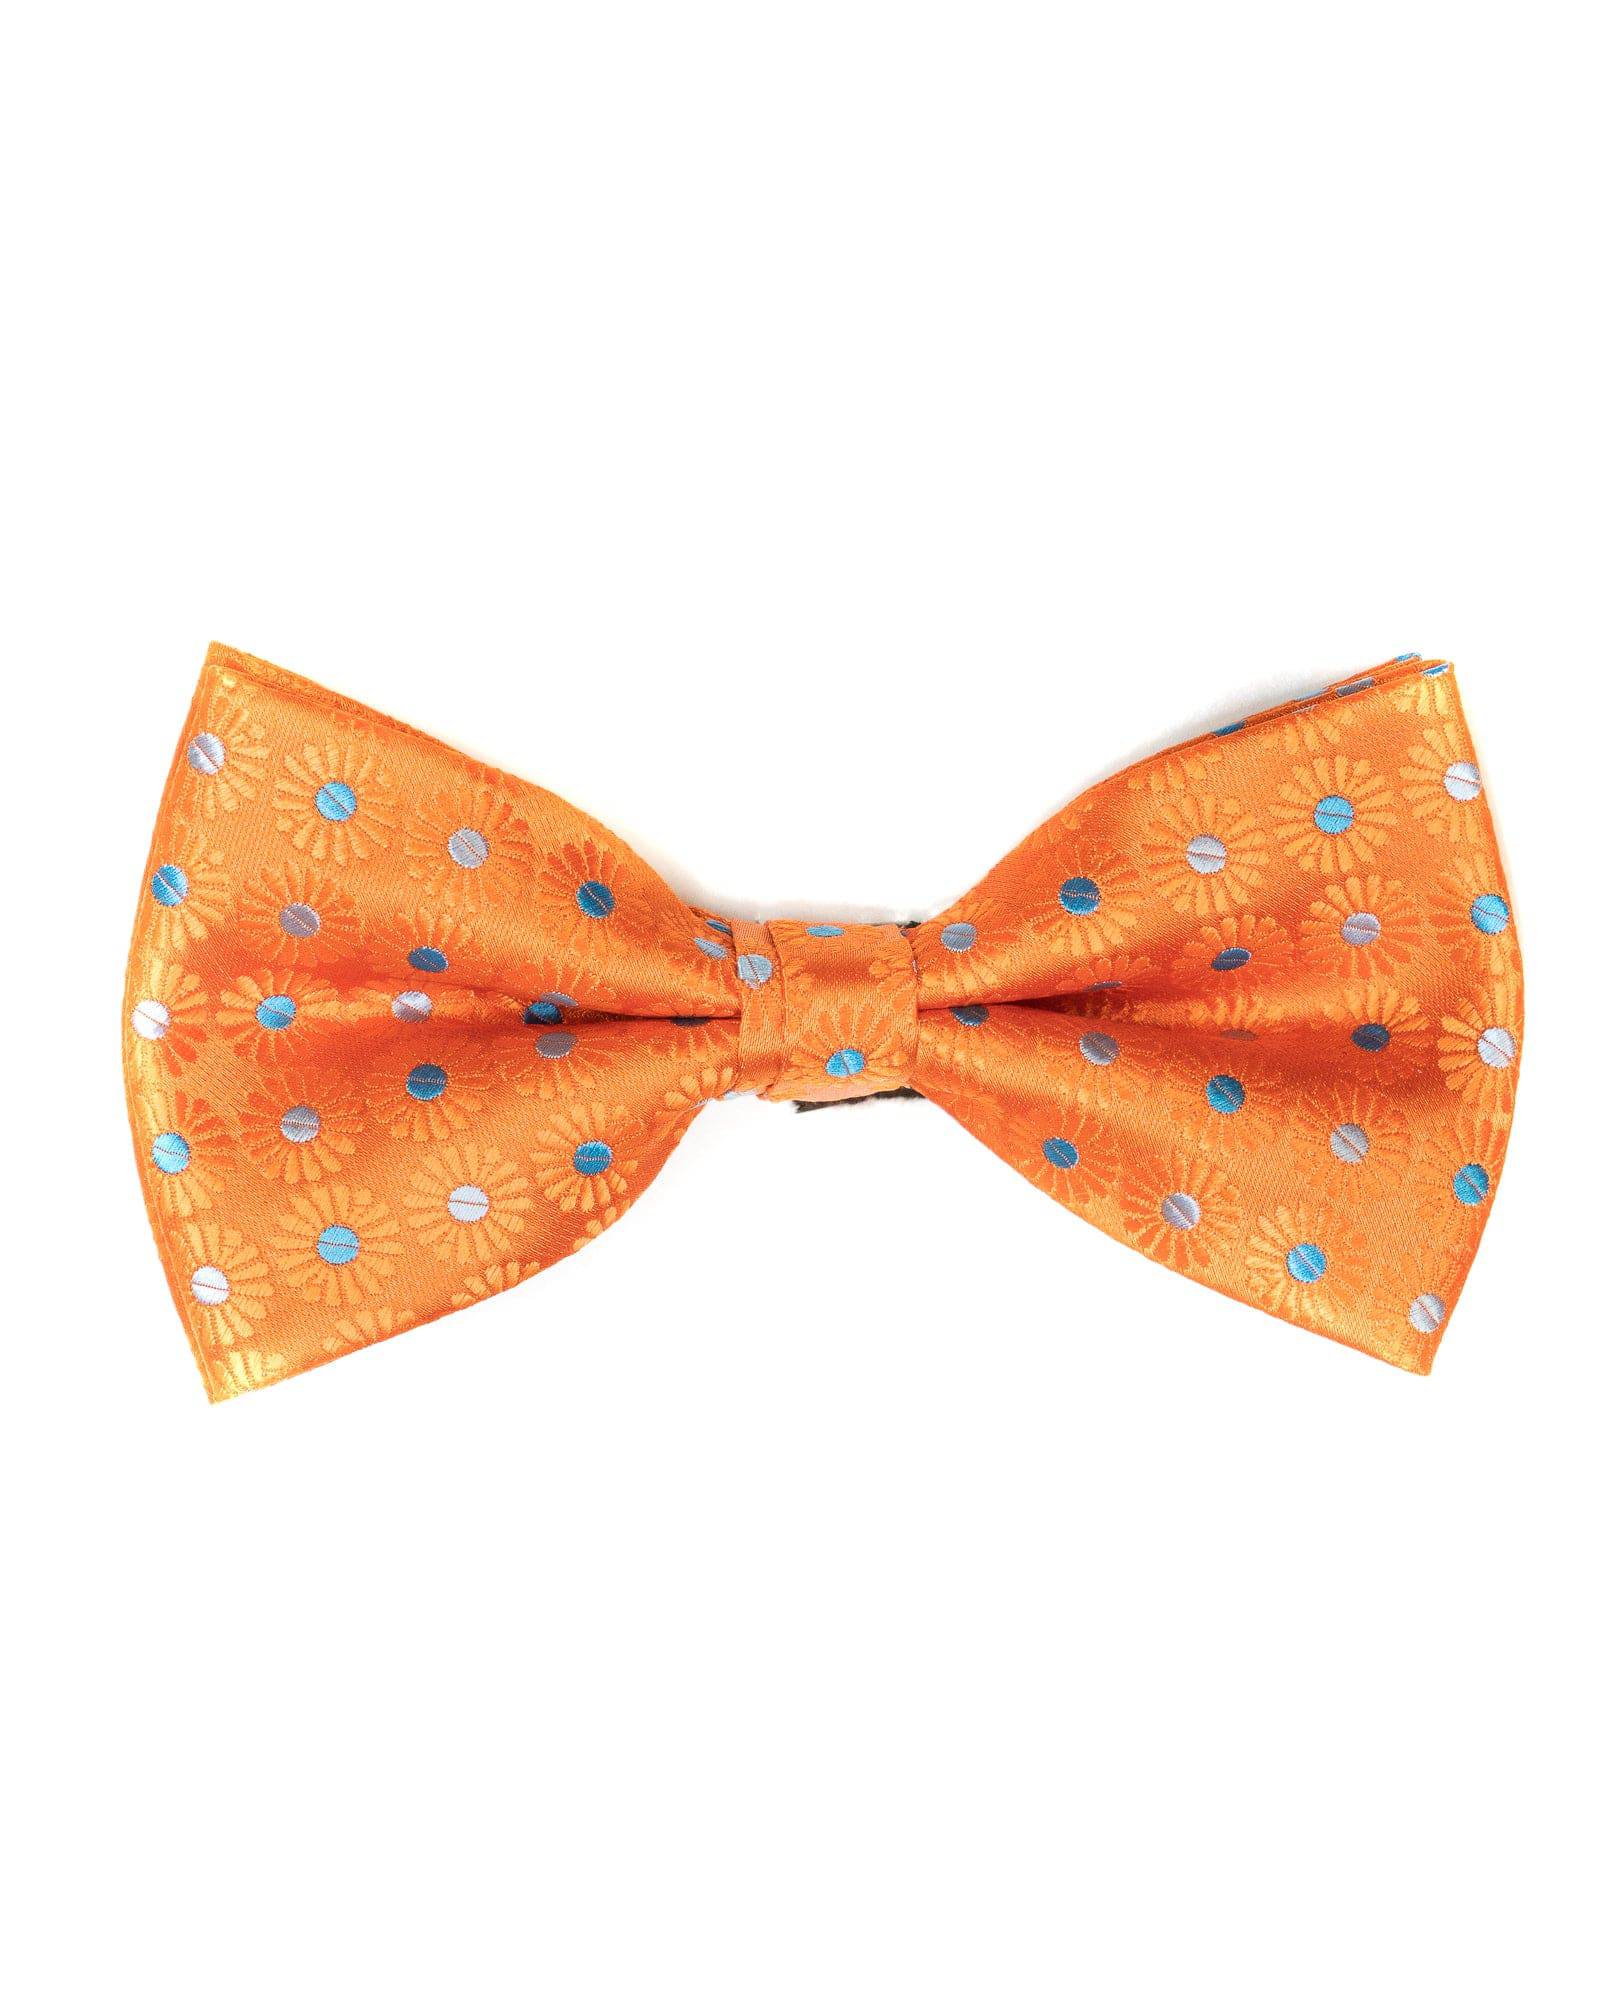 Bow Tie In Foulard Pattern Orange & Blue - Rainwater's Men's Clothing and Tuxedo Rental